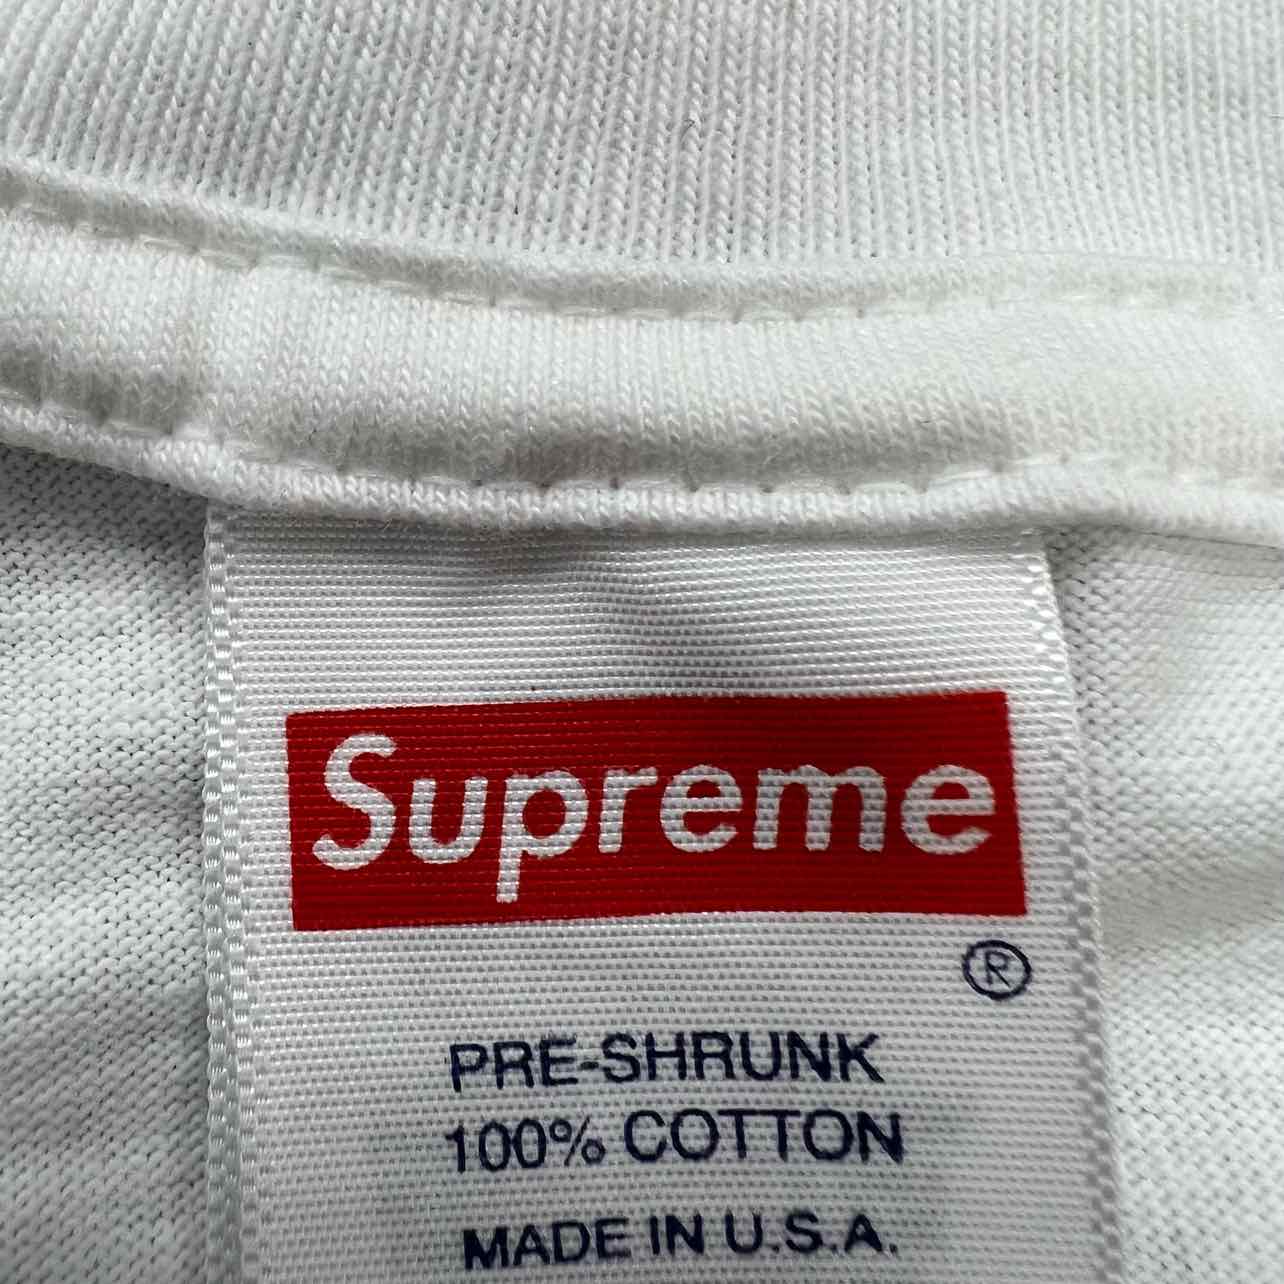 Supreme T-Shirt &quot;SEOUL BOX LOGO&quot; White New Size M